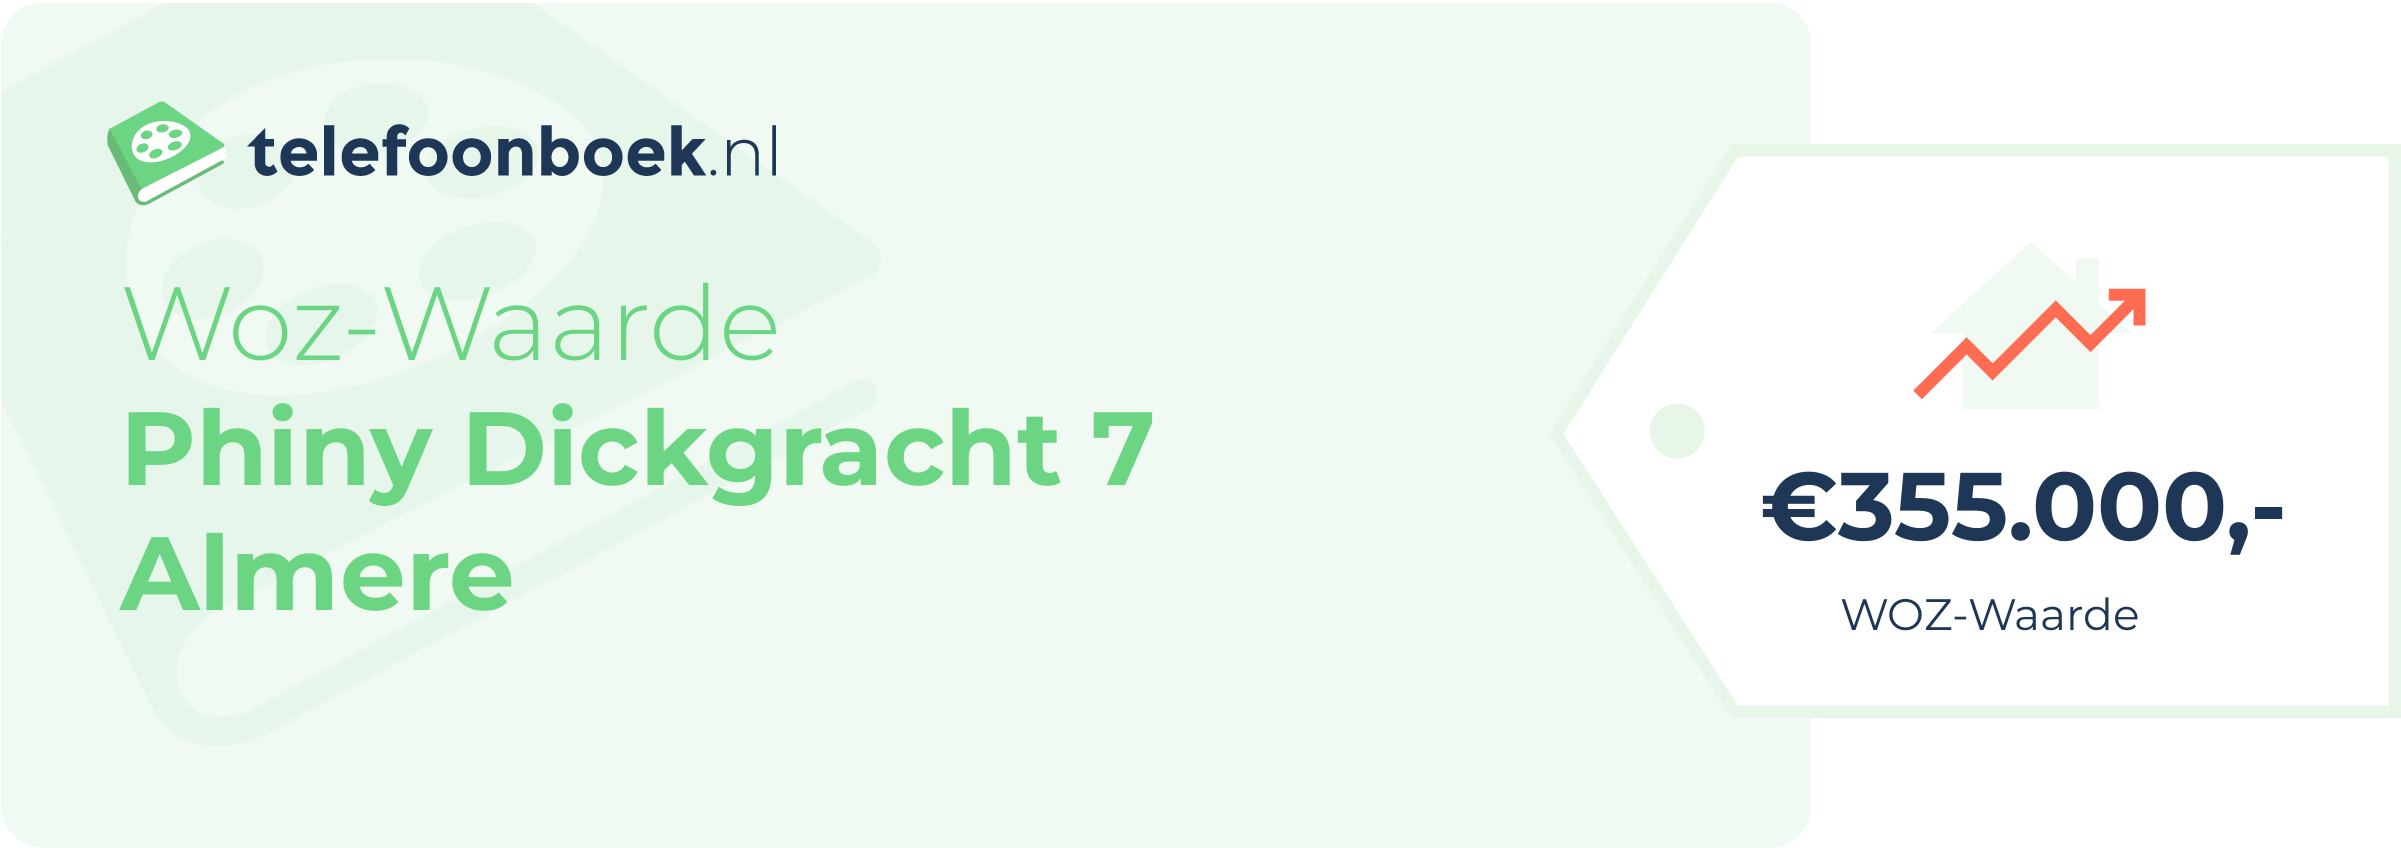 WOZ-waarde Phiny Dickgracht 7 Almere